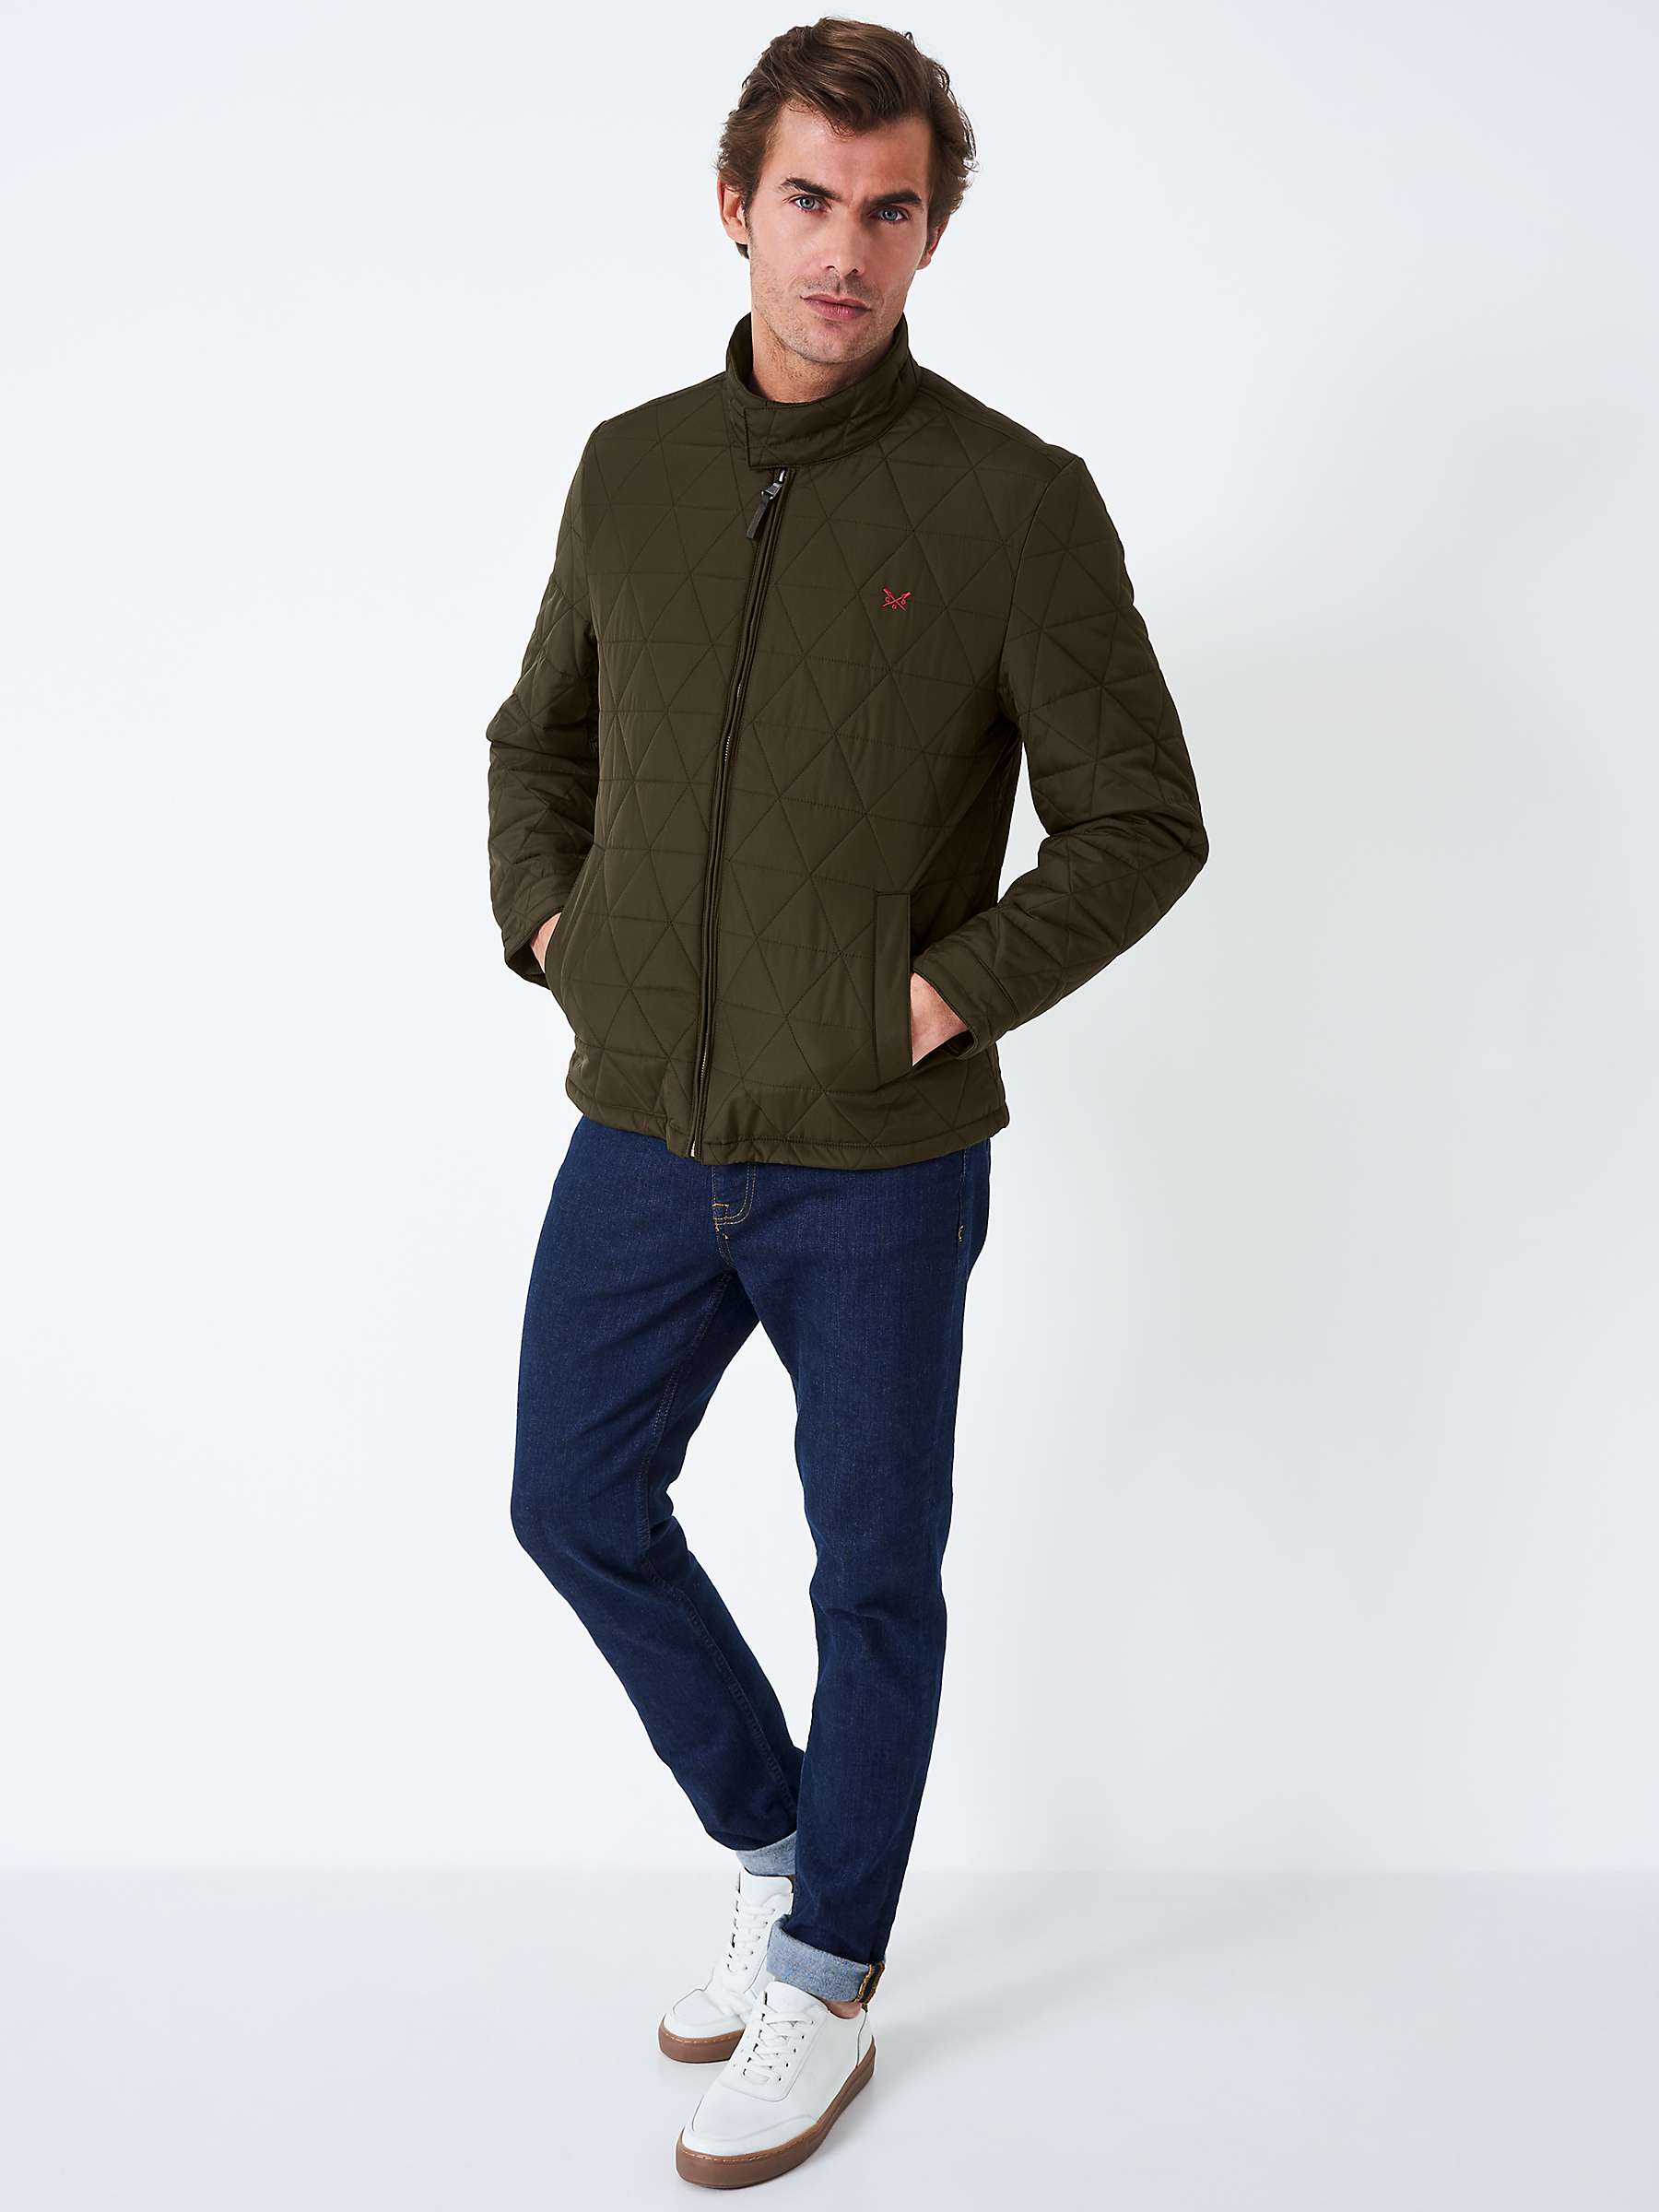 Crew Clothing Chiswick Plain Quilted Jacket, Khaki at John Lewis & Partners